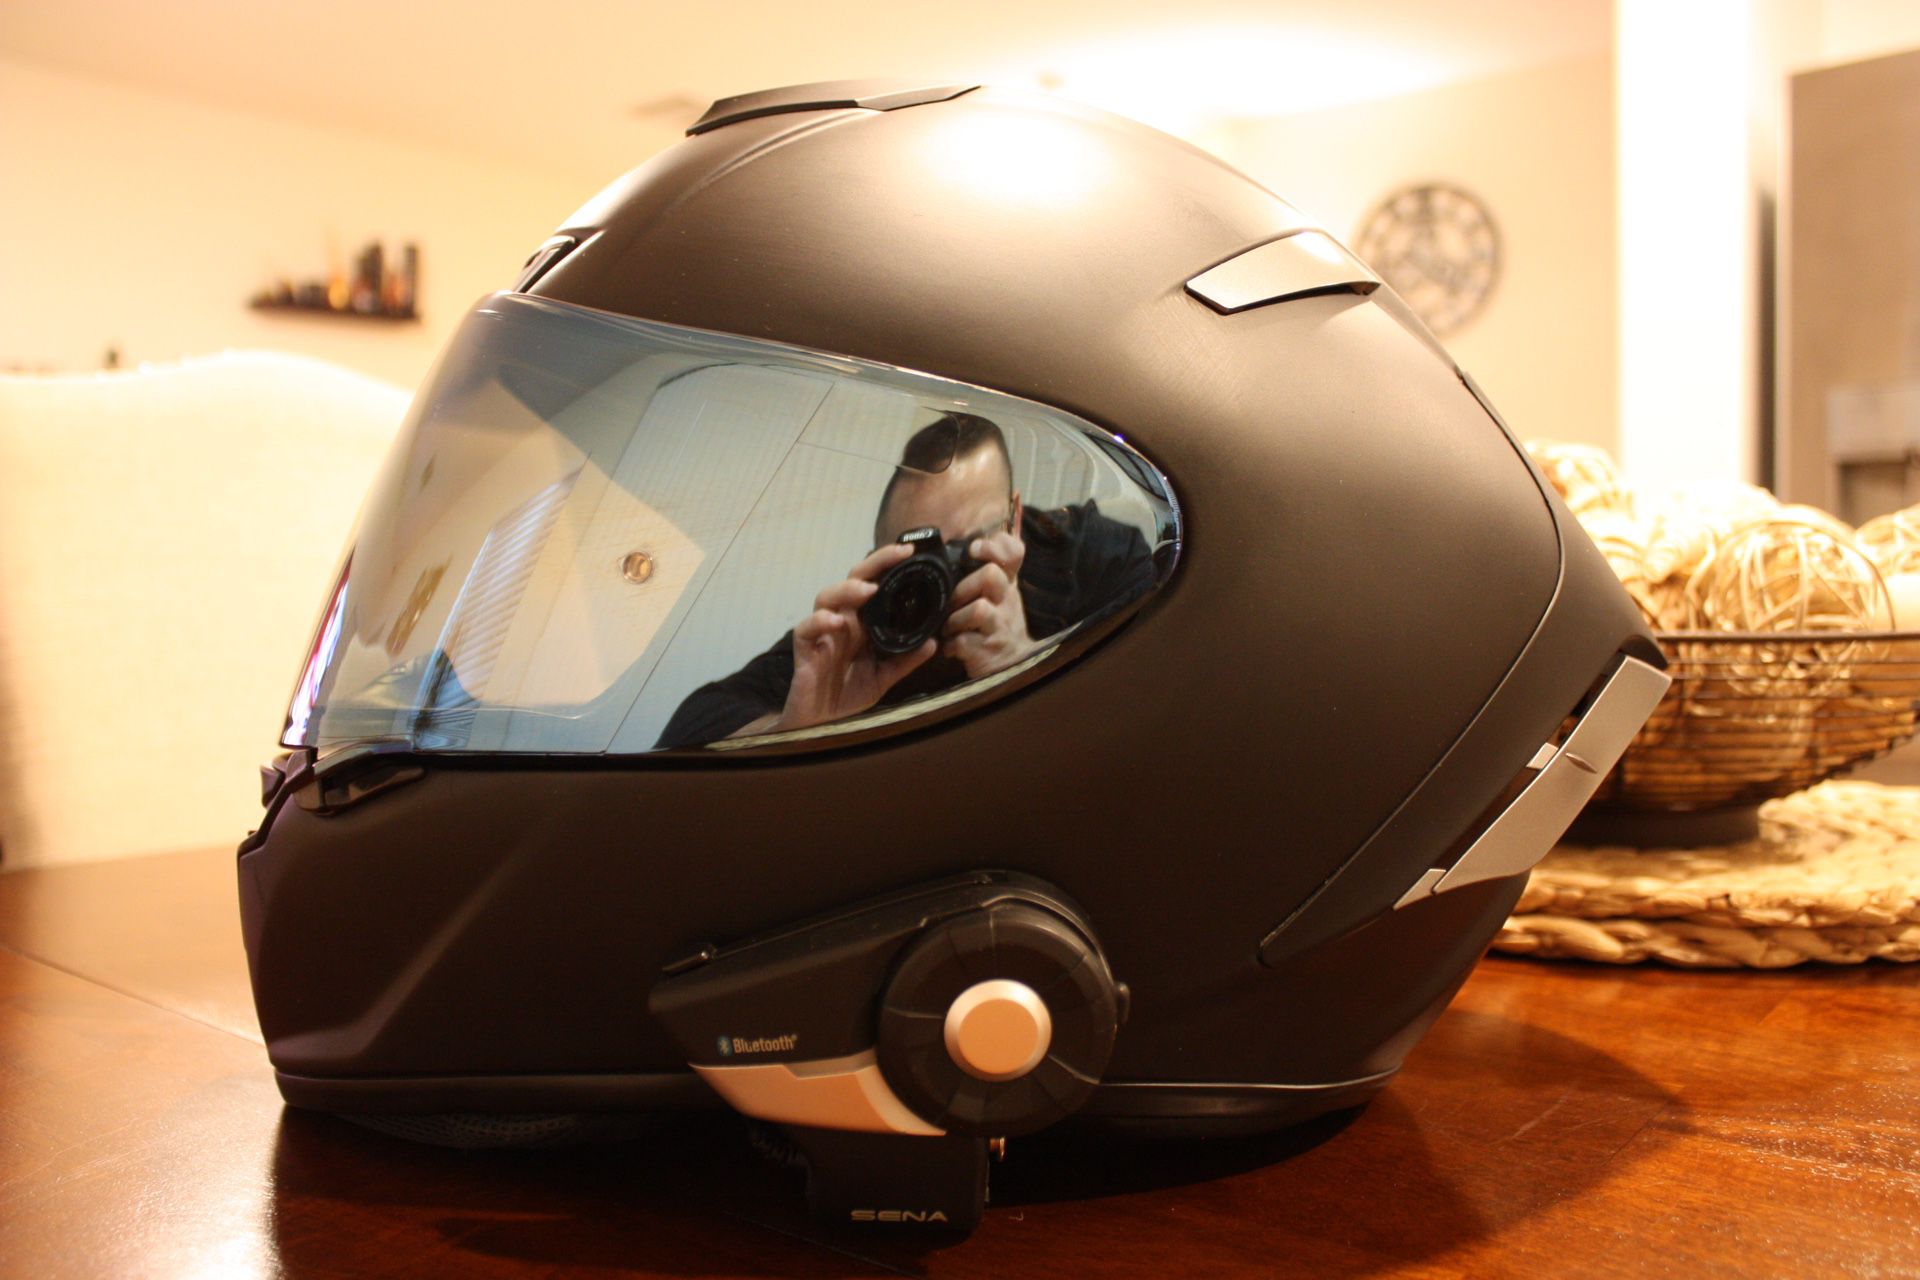 Shoei X-14 Matte Black Racing Motorcycle Helmet Size L w/Sena 20S 